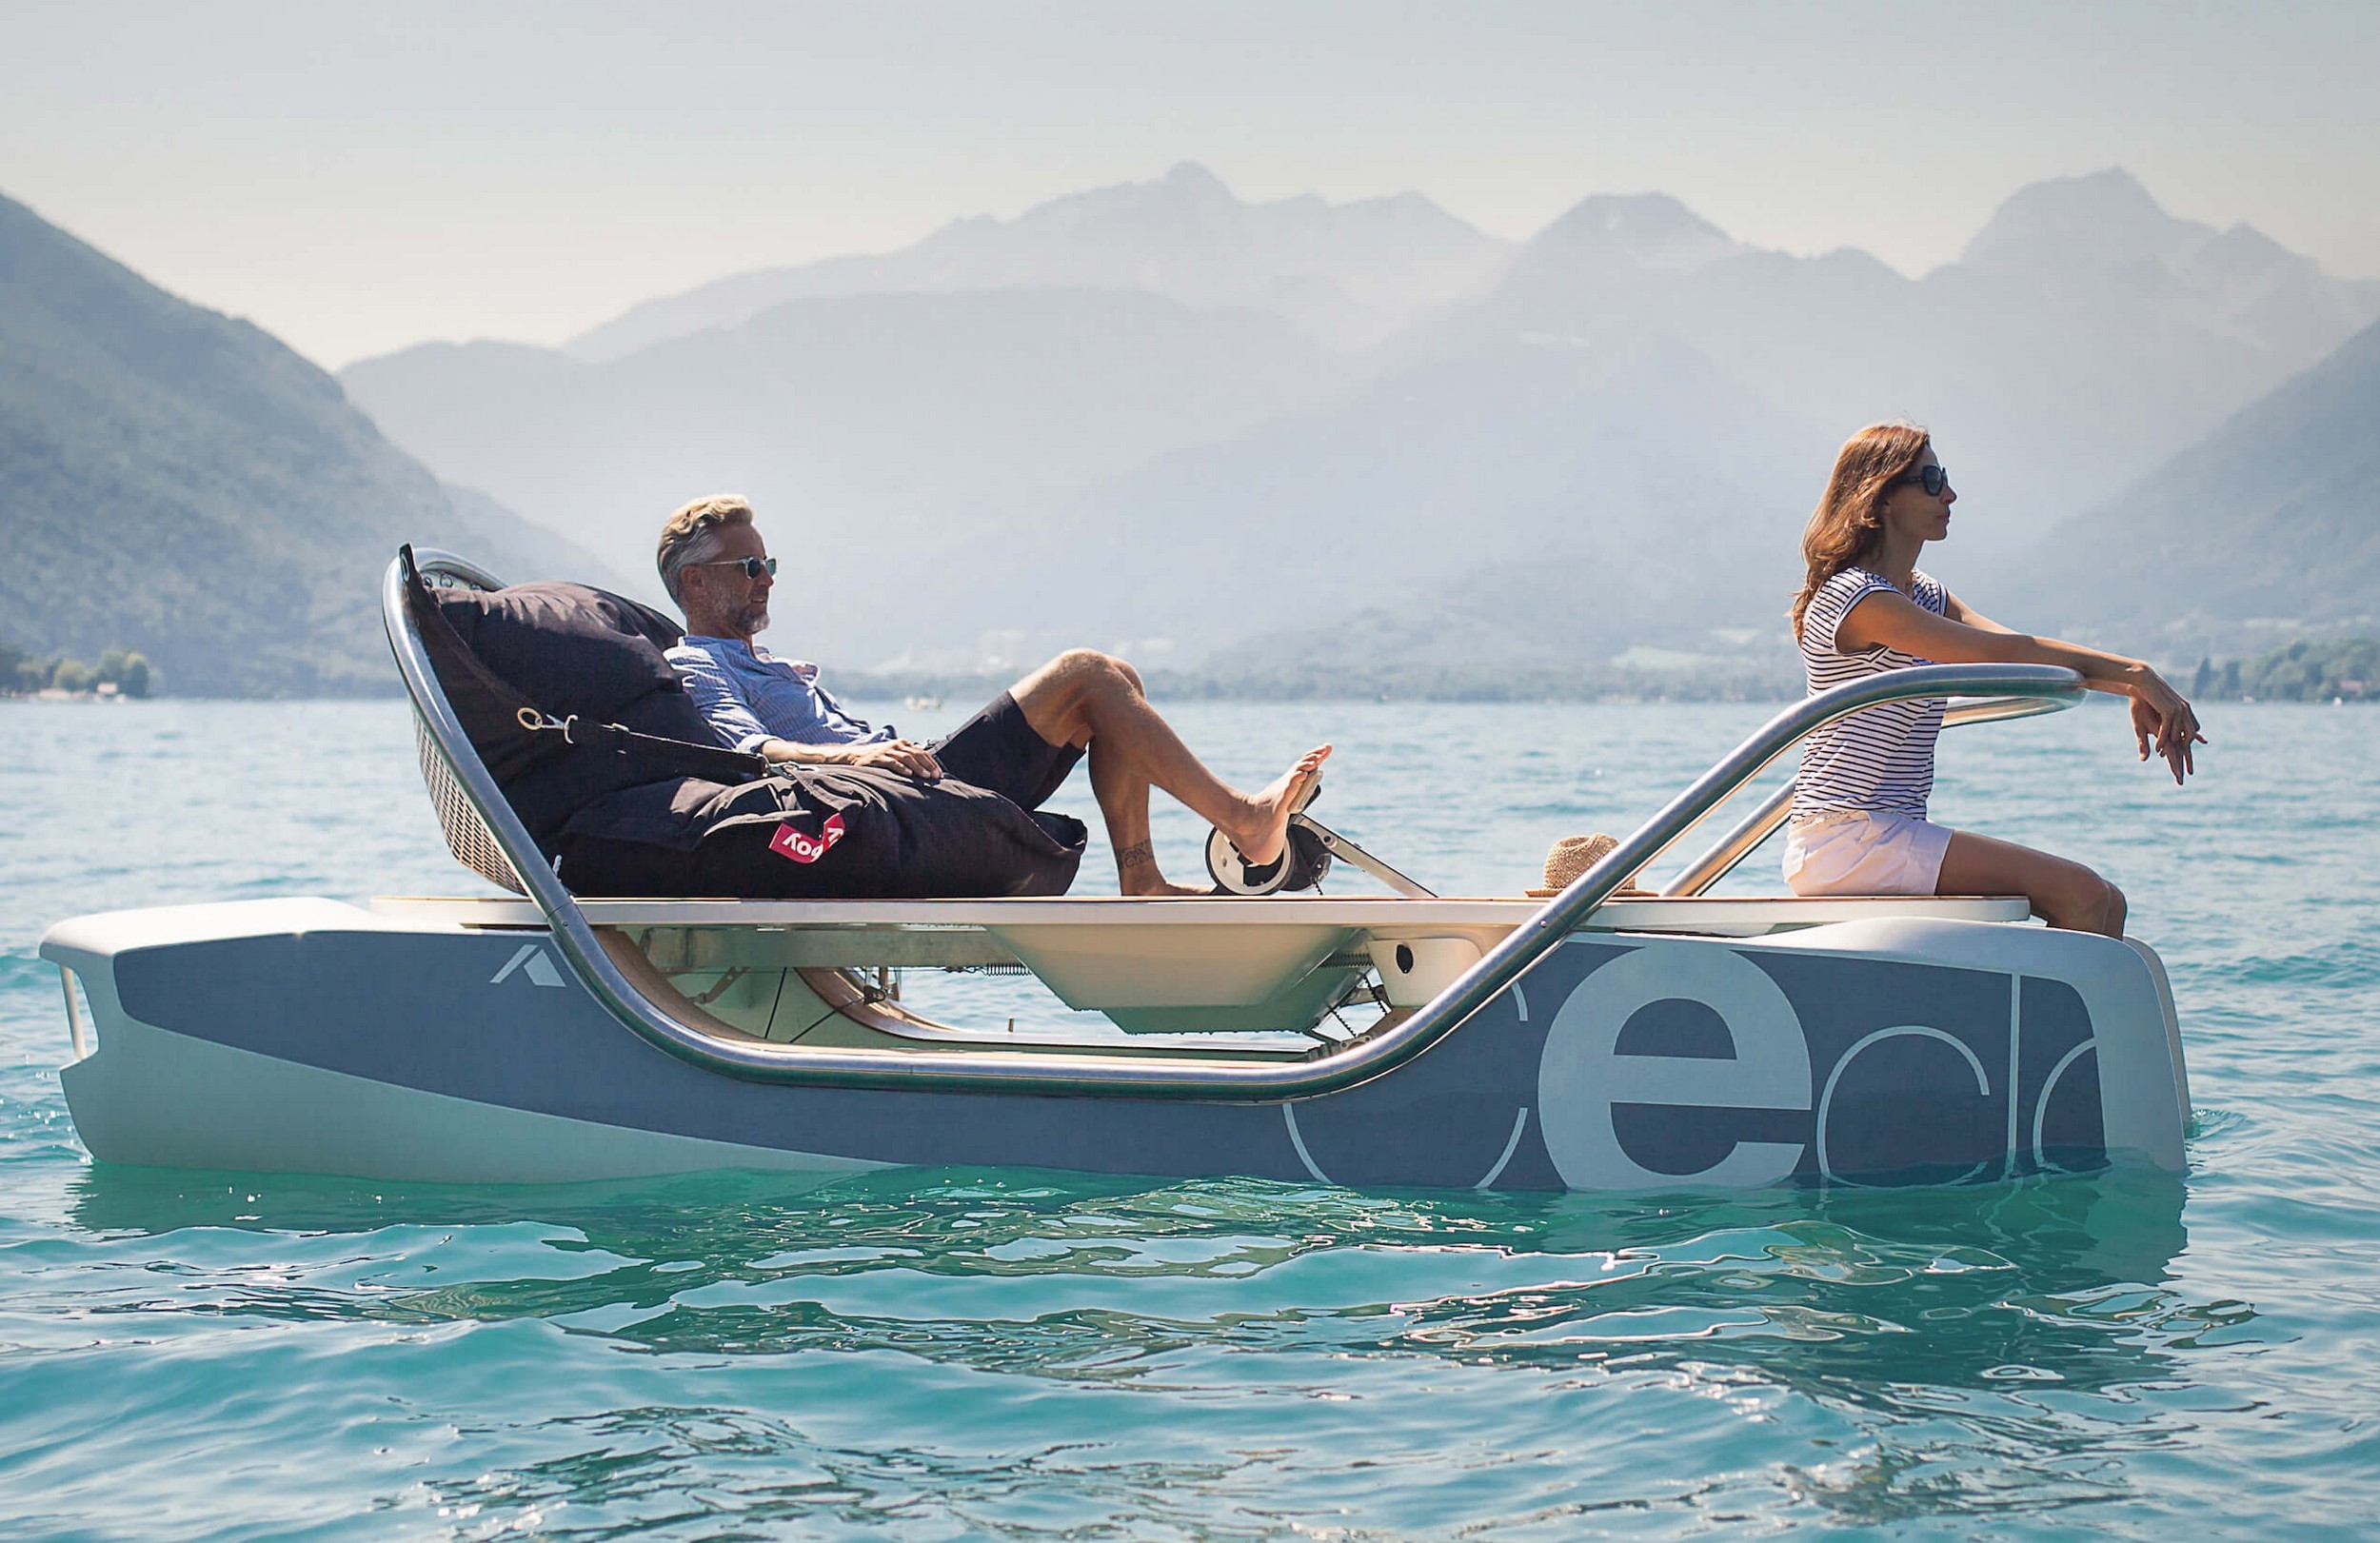 https://s1.cdn.autoevolution.com/images/news/gallery/ceclo-original-hybrid-catamaran-pedal-boat-challenges-lifestyle-norms-for-little-cash_1.jpg